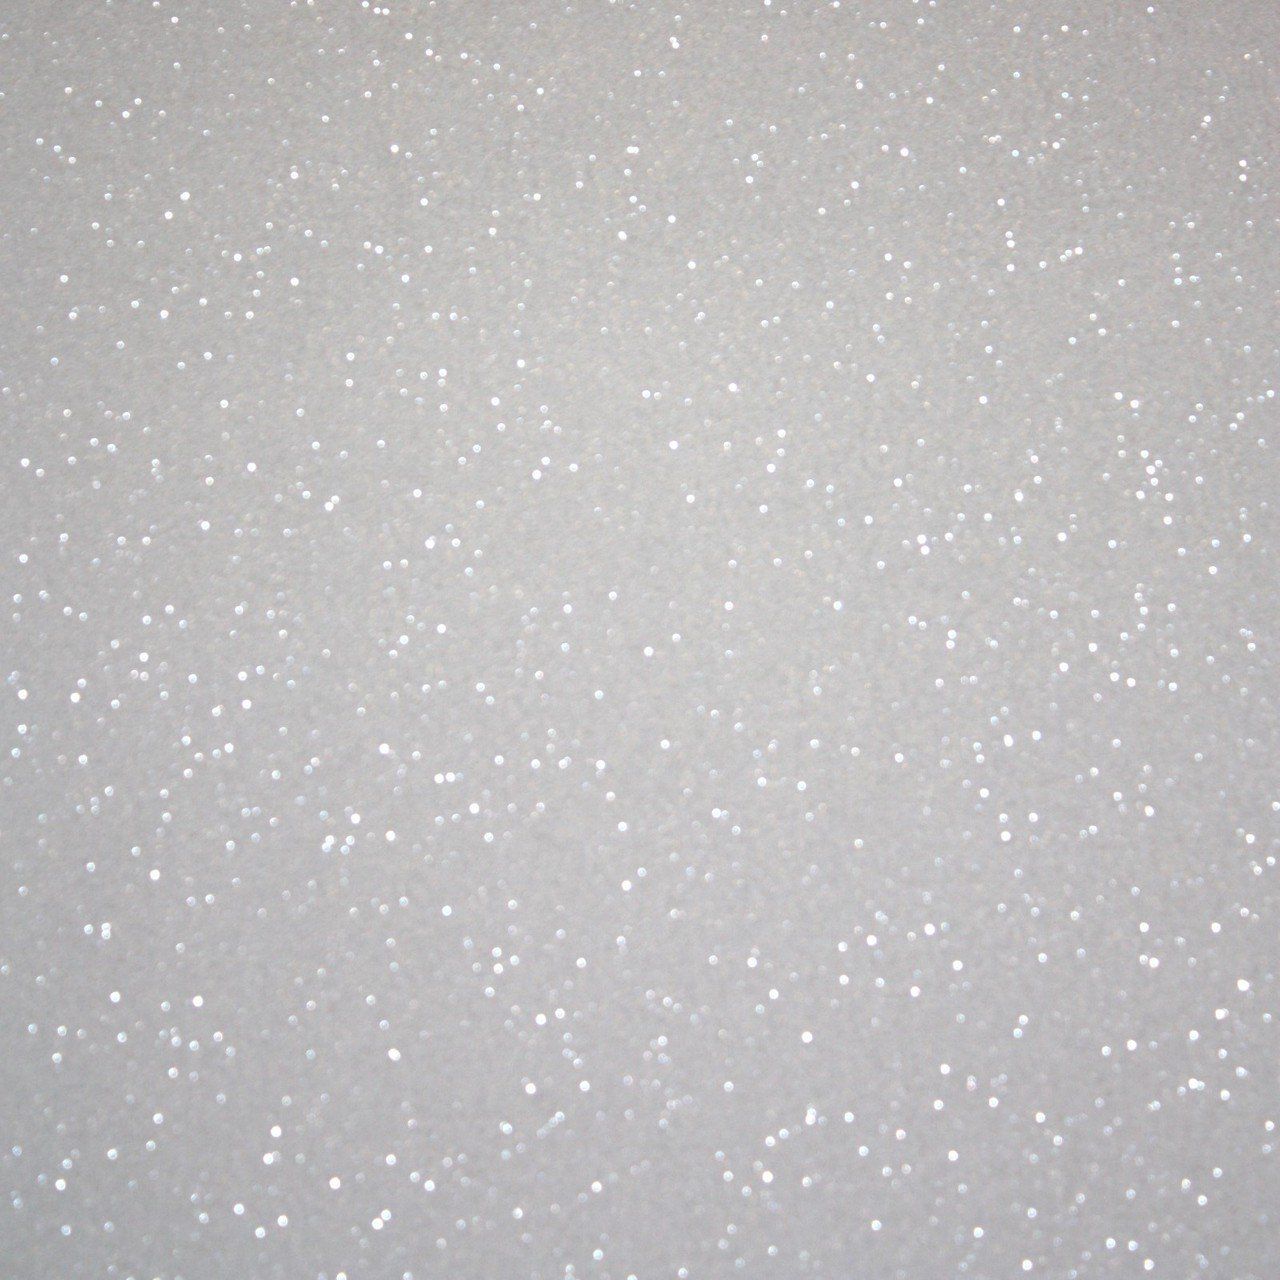 Glitter Wallpaper Free Glitter Background